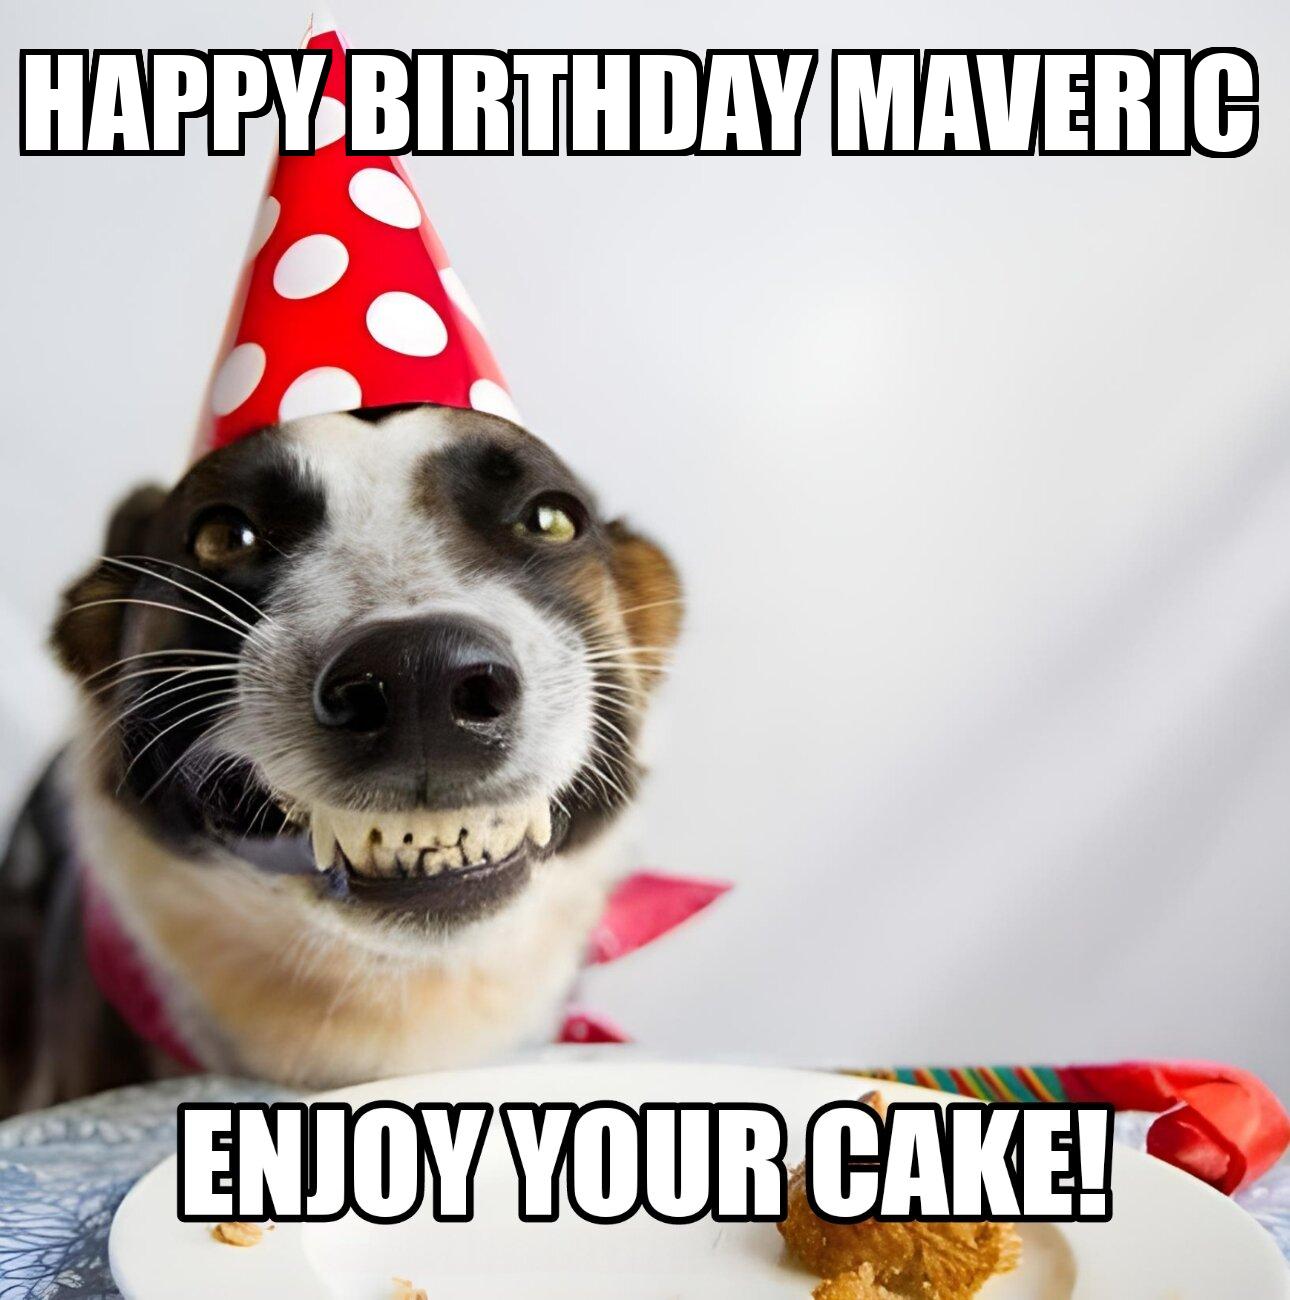 Happy Birthday Maveric Enjoy Your Cake Dog Meme